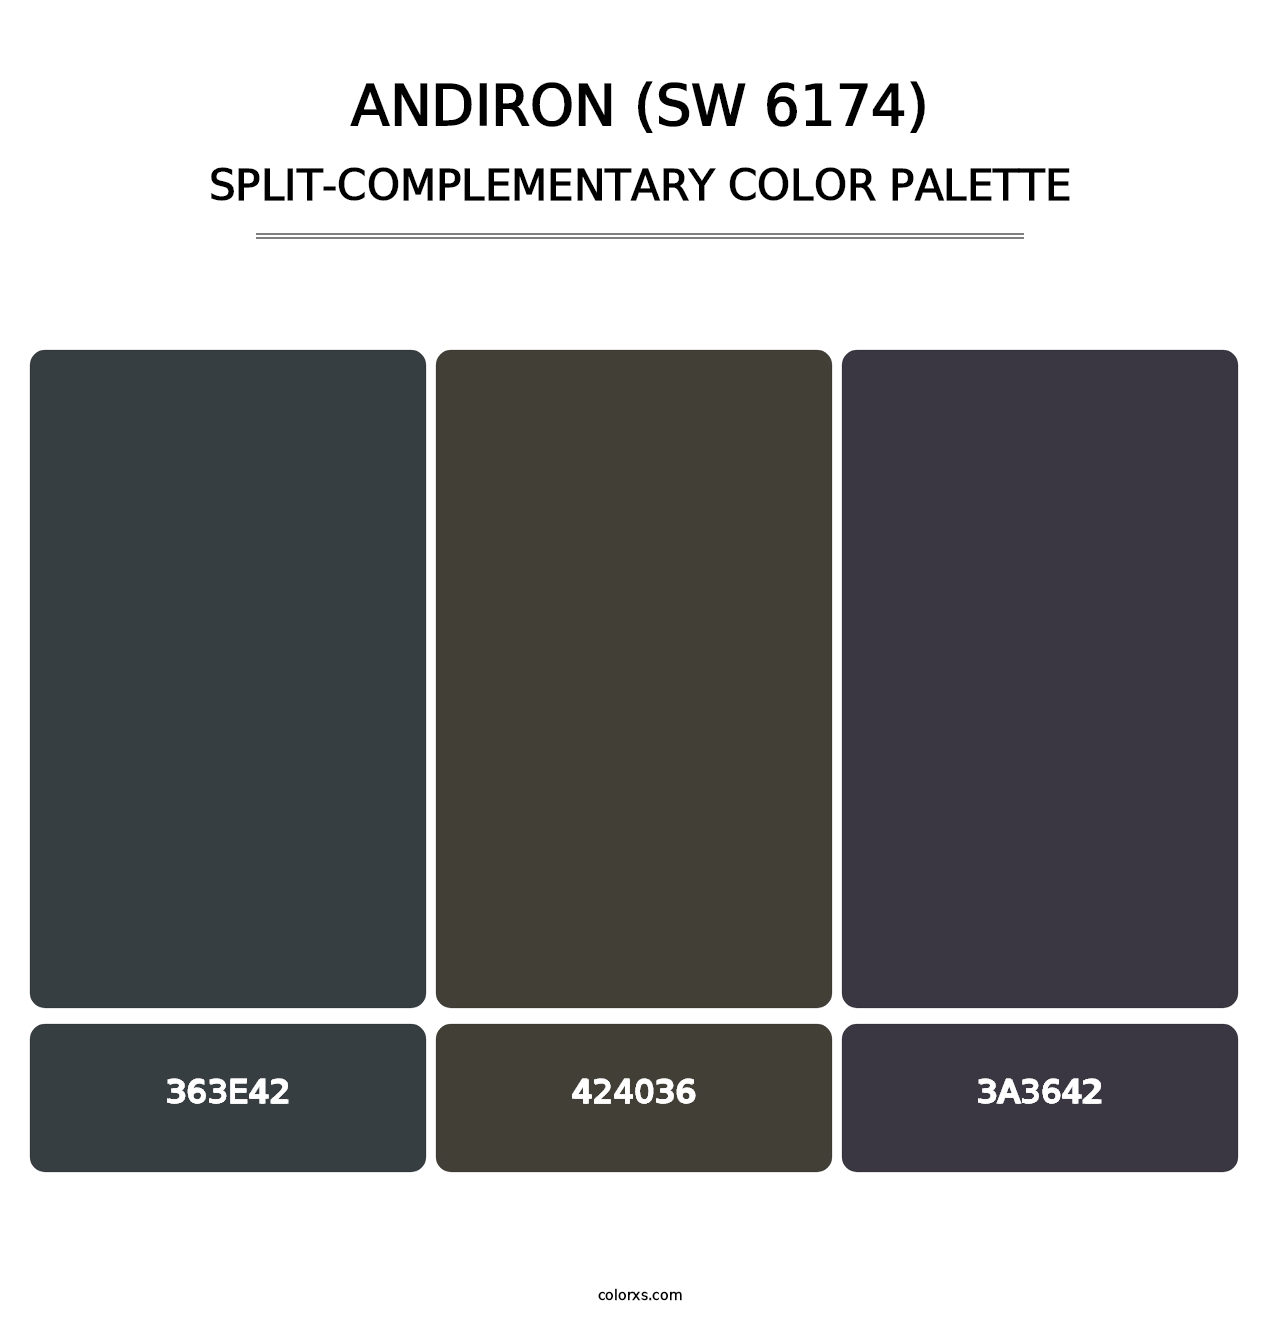 Andiron (SW 6174) - Split-Complementary Color Palette